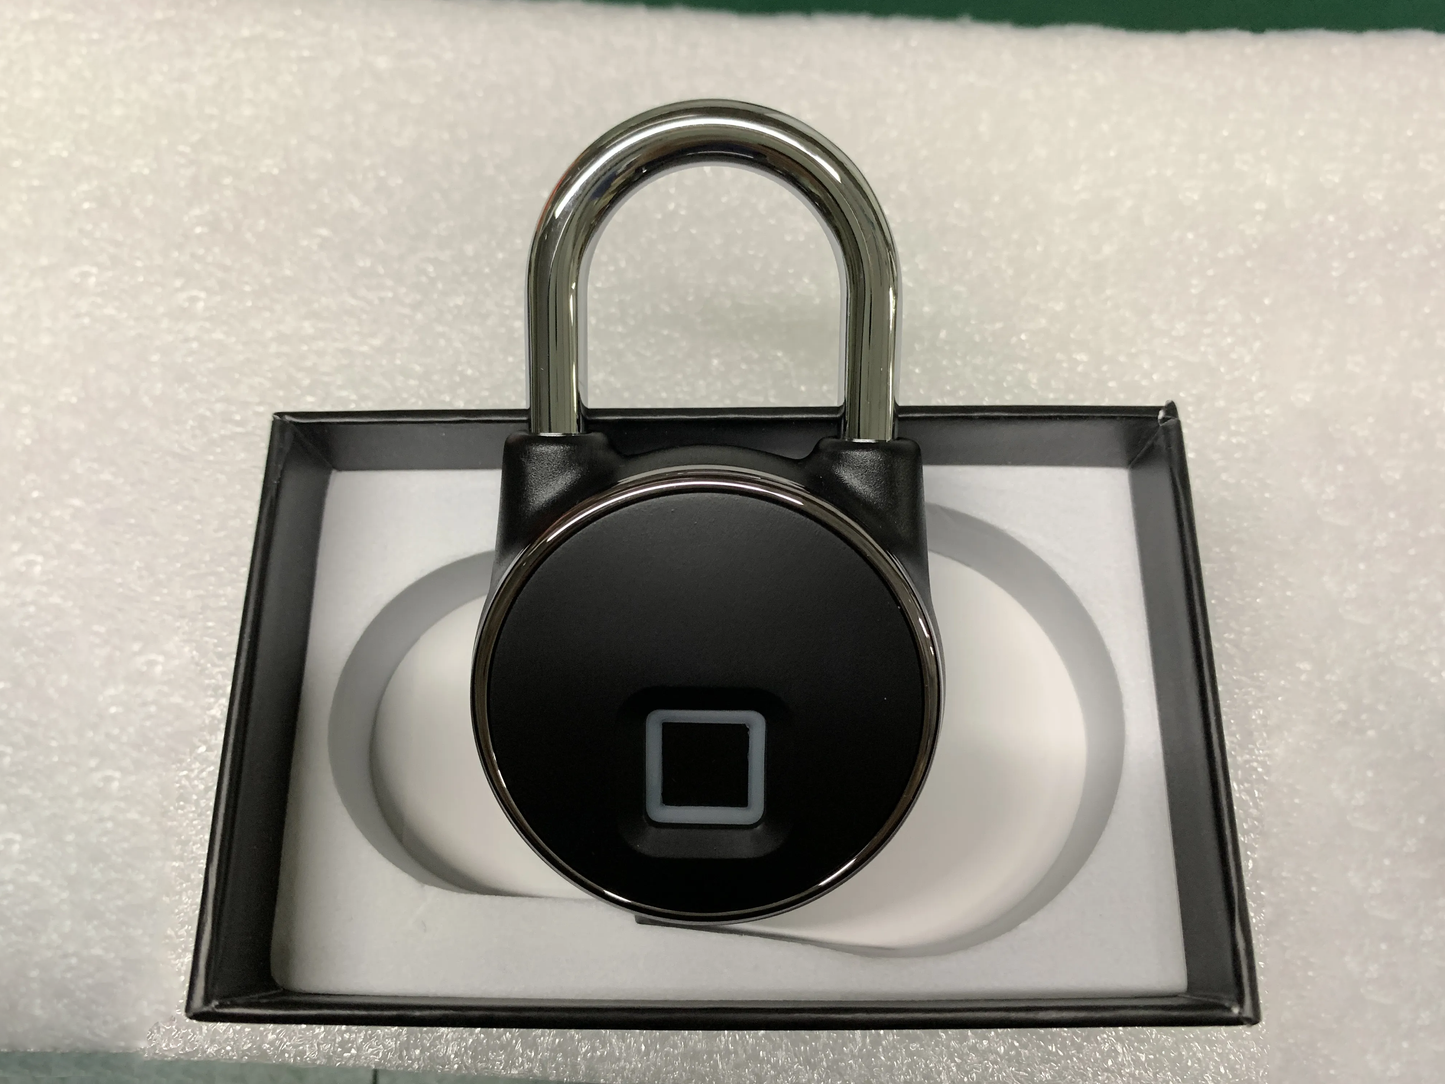 BDI Bluetooth Safe Waterproof Tuya Keyless USB Rechargeable Smart Fingerprint Lock